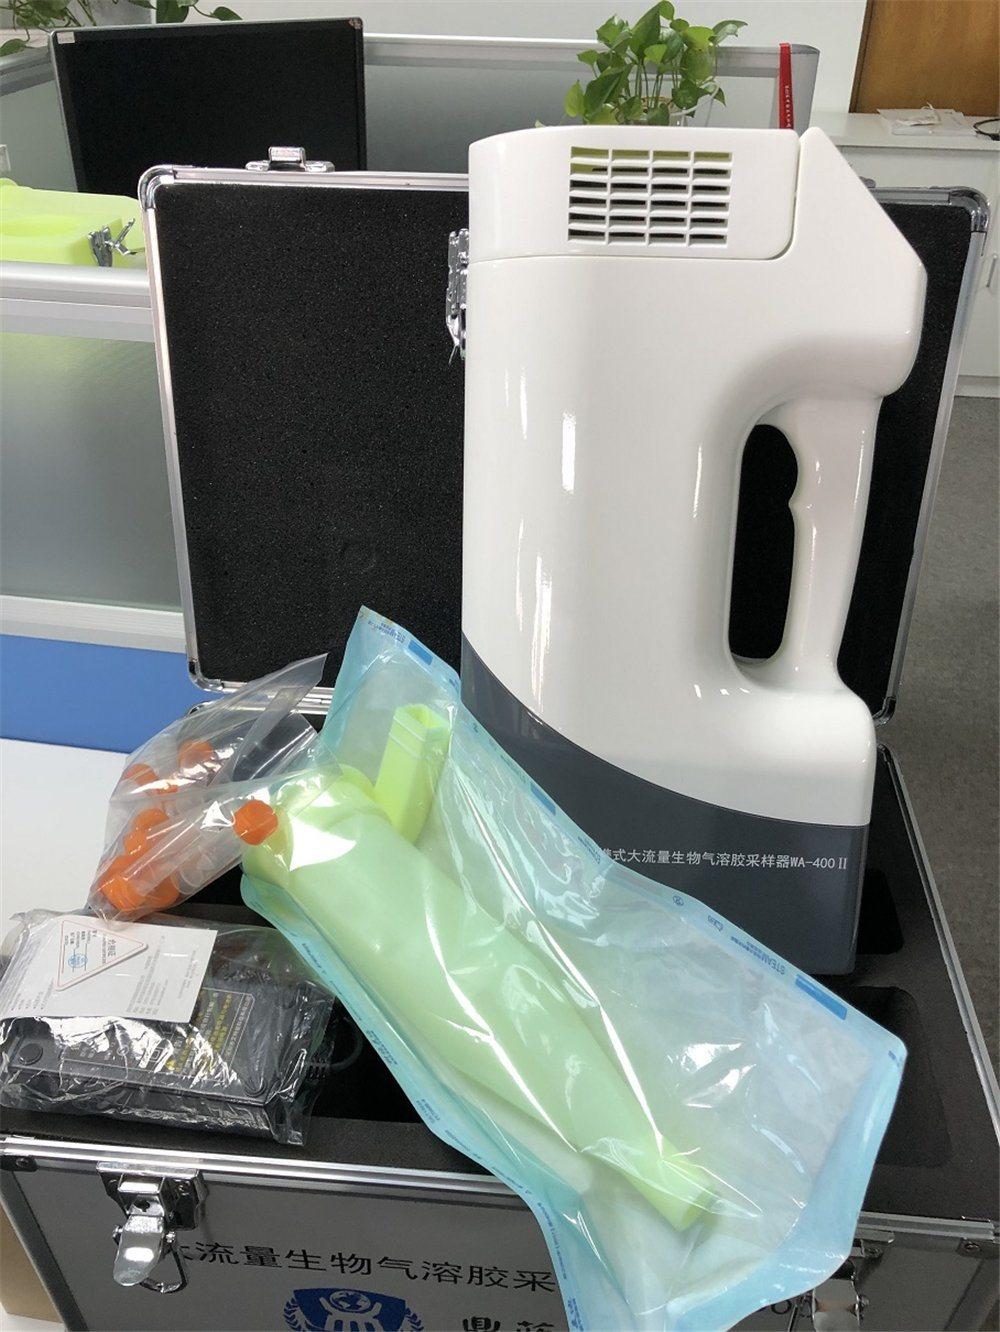 Portable High-Flow Bioaerosol Sampler Wa-400II for Virus Air Sampling Test